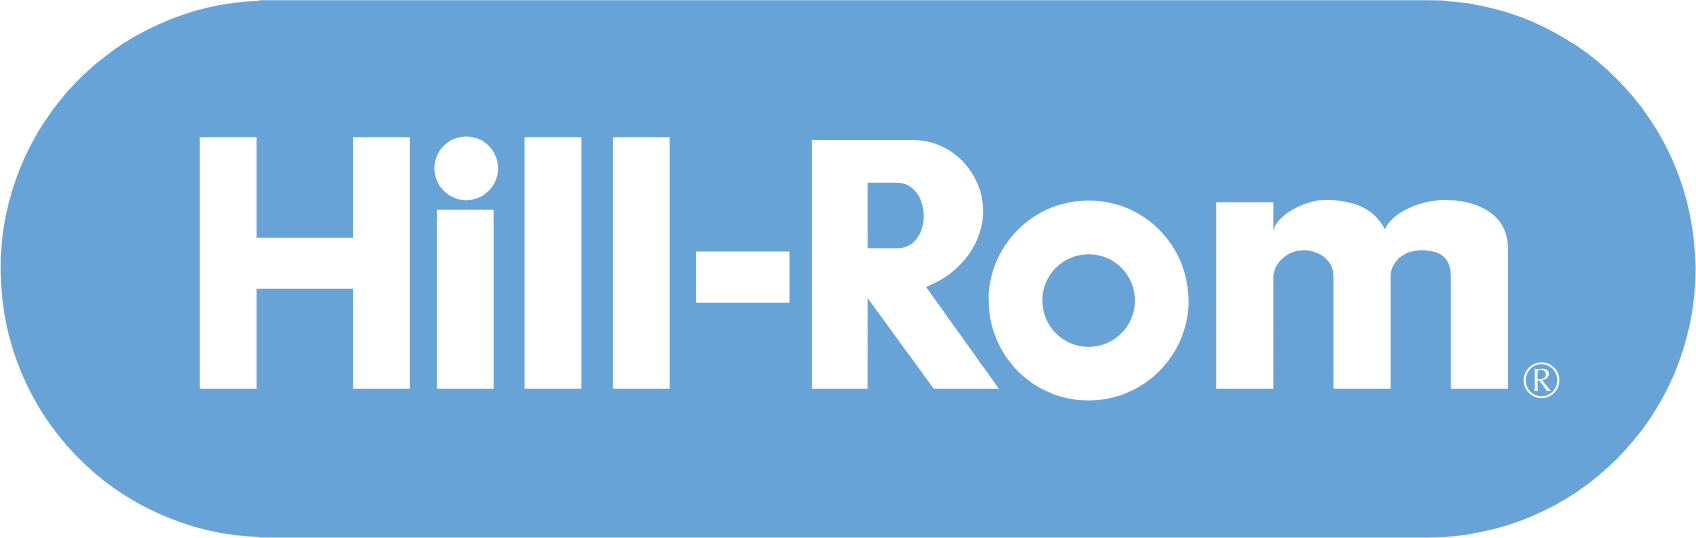 Hill-Rom logo (transparent PNG)